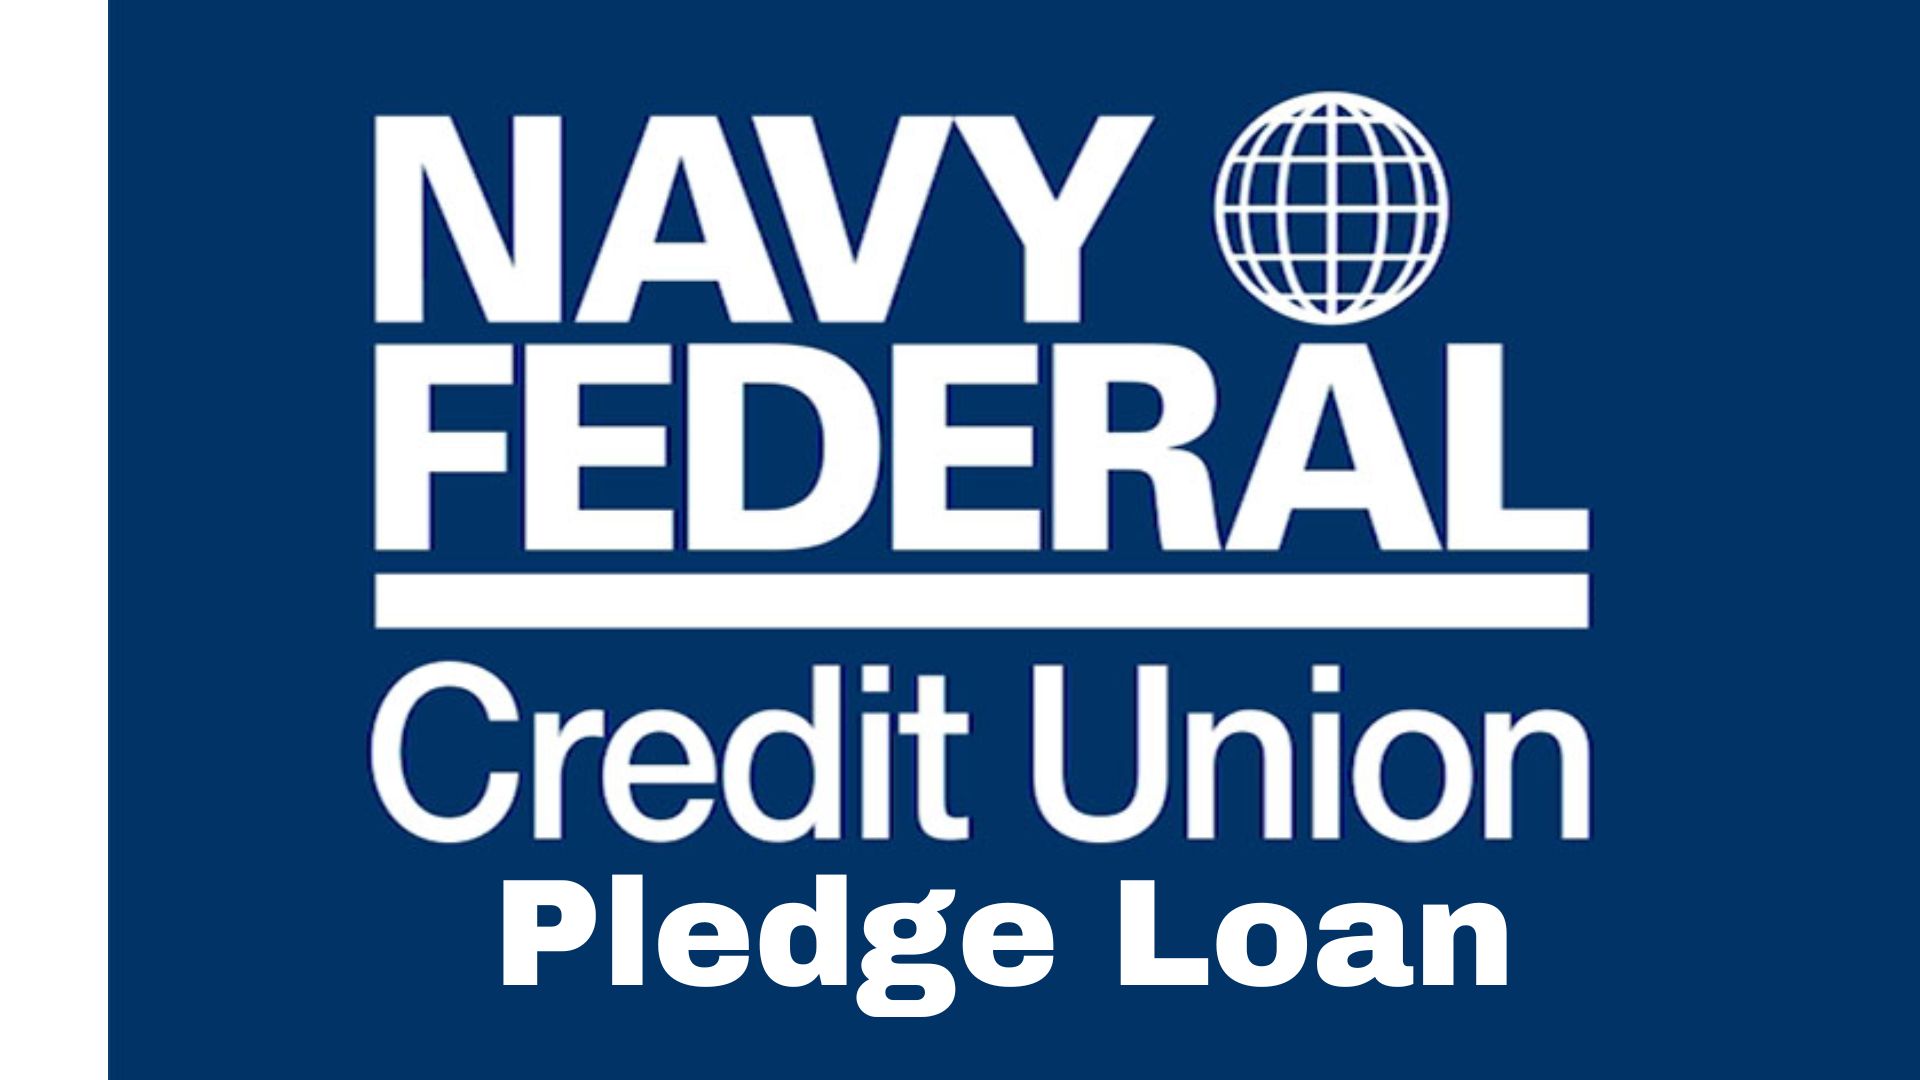 Navy Federal Pledge Loan